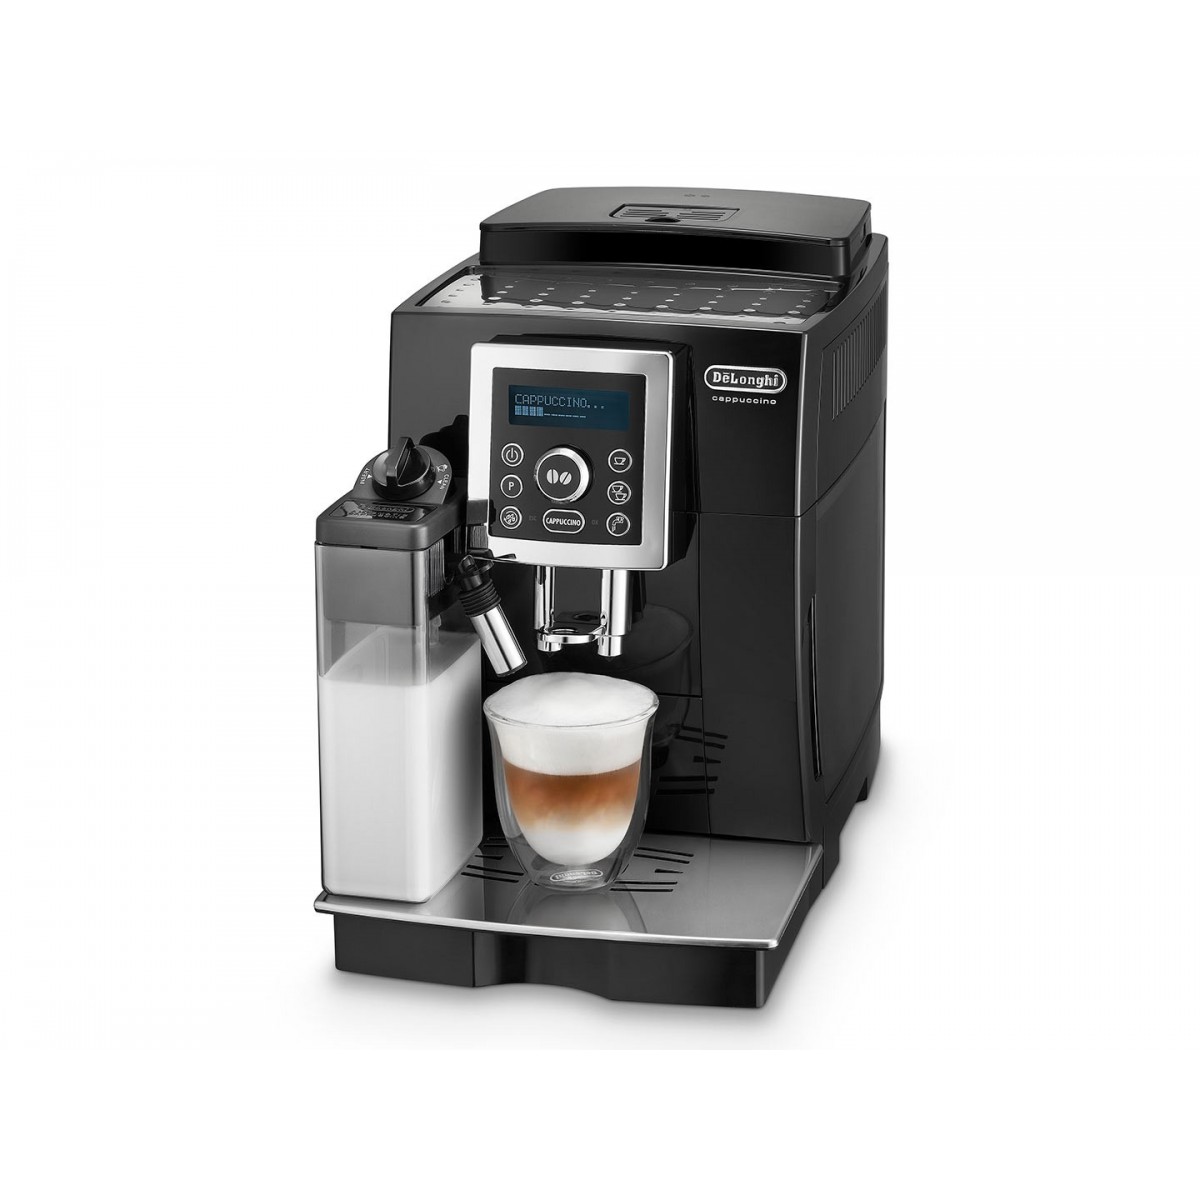 De Longhi ECAM23.463.B - Espresso machine - Coffee beans - Ground coffee - Built-in grinder - 1450 W - Black